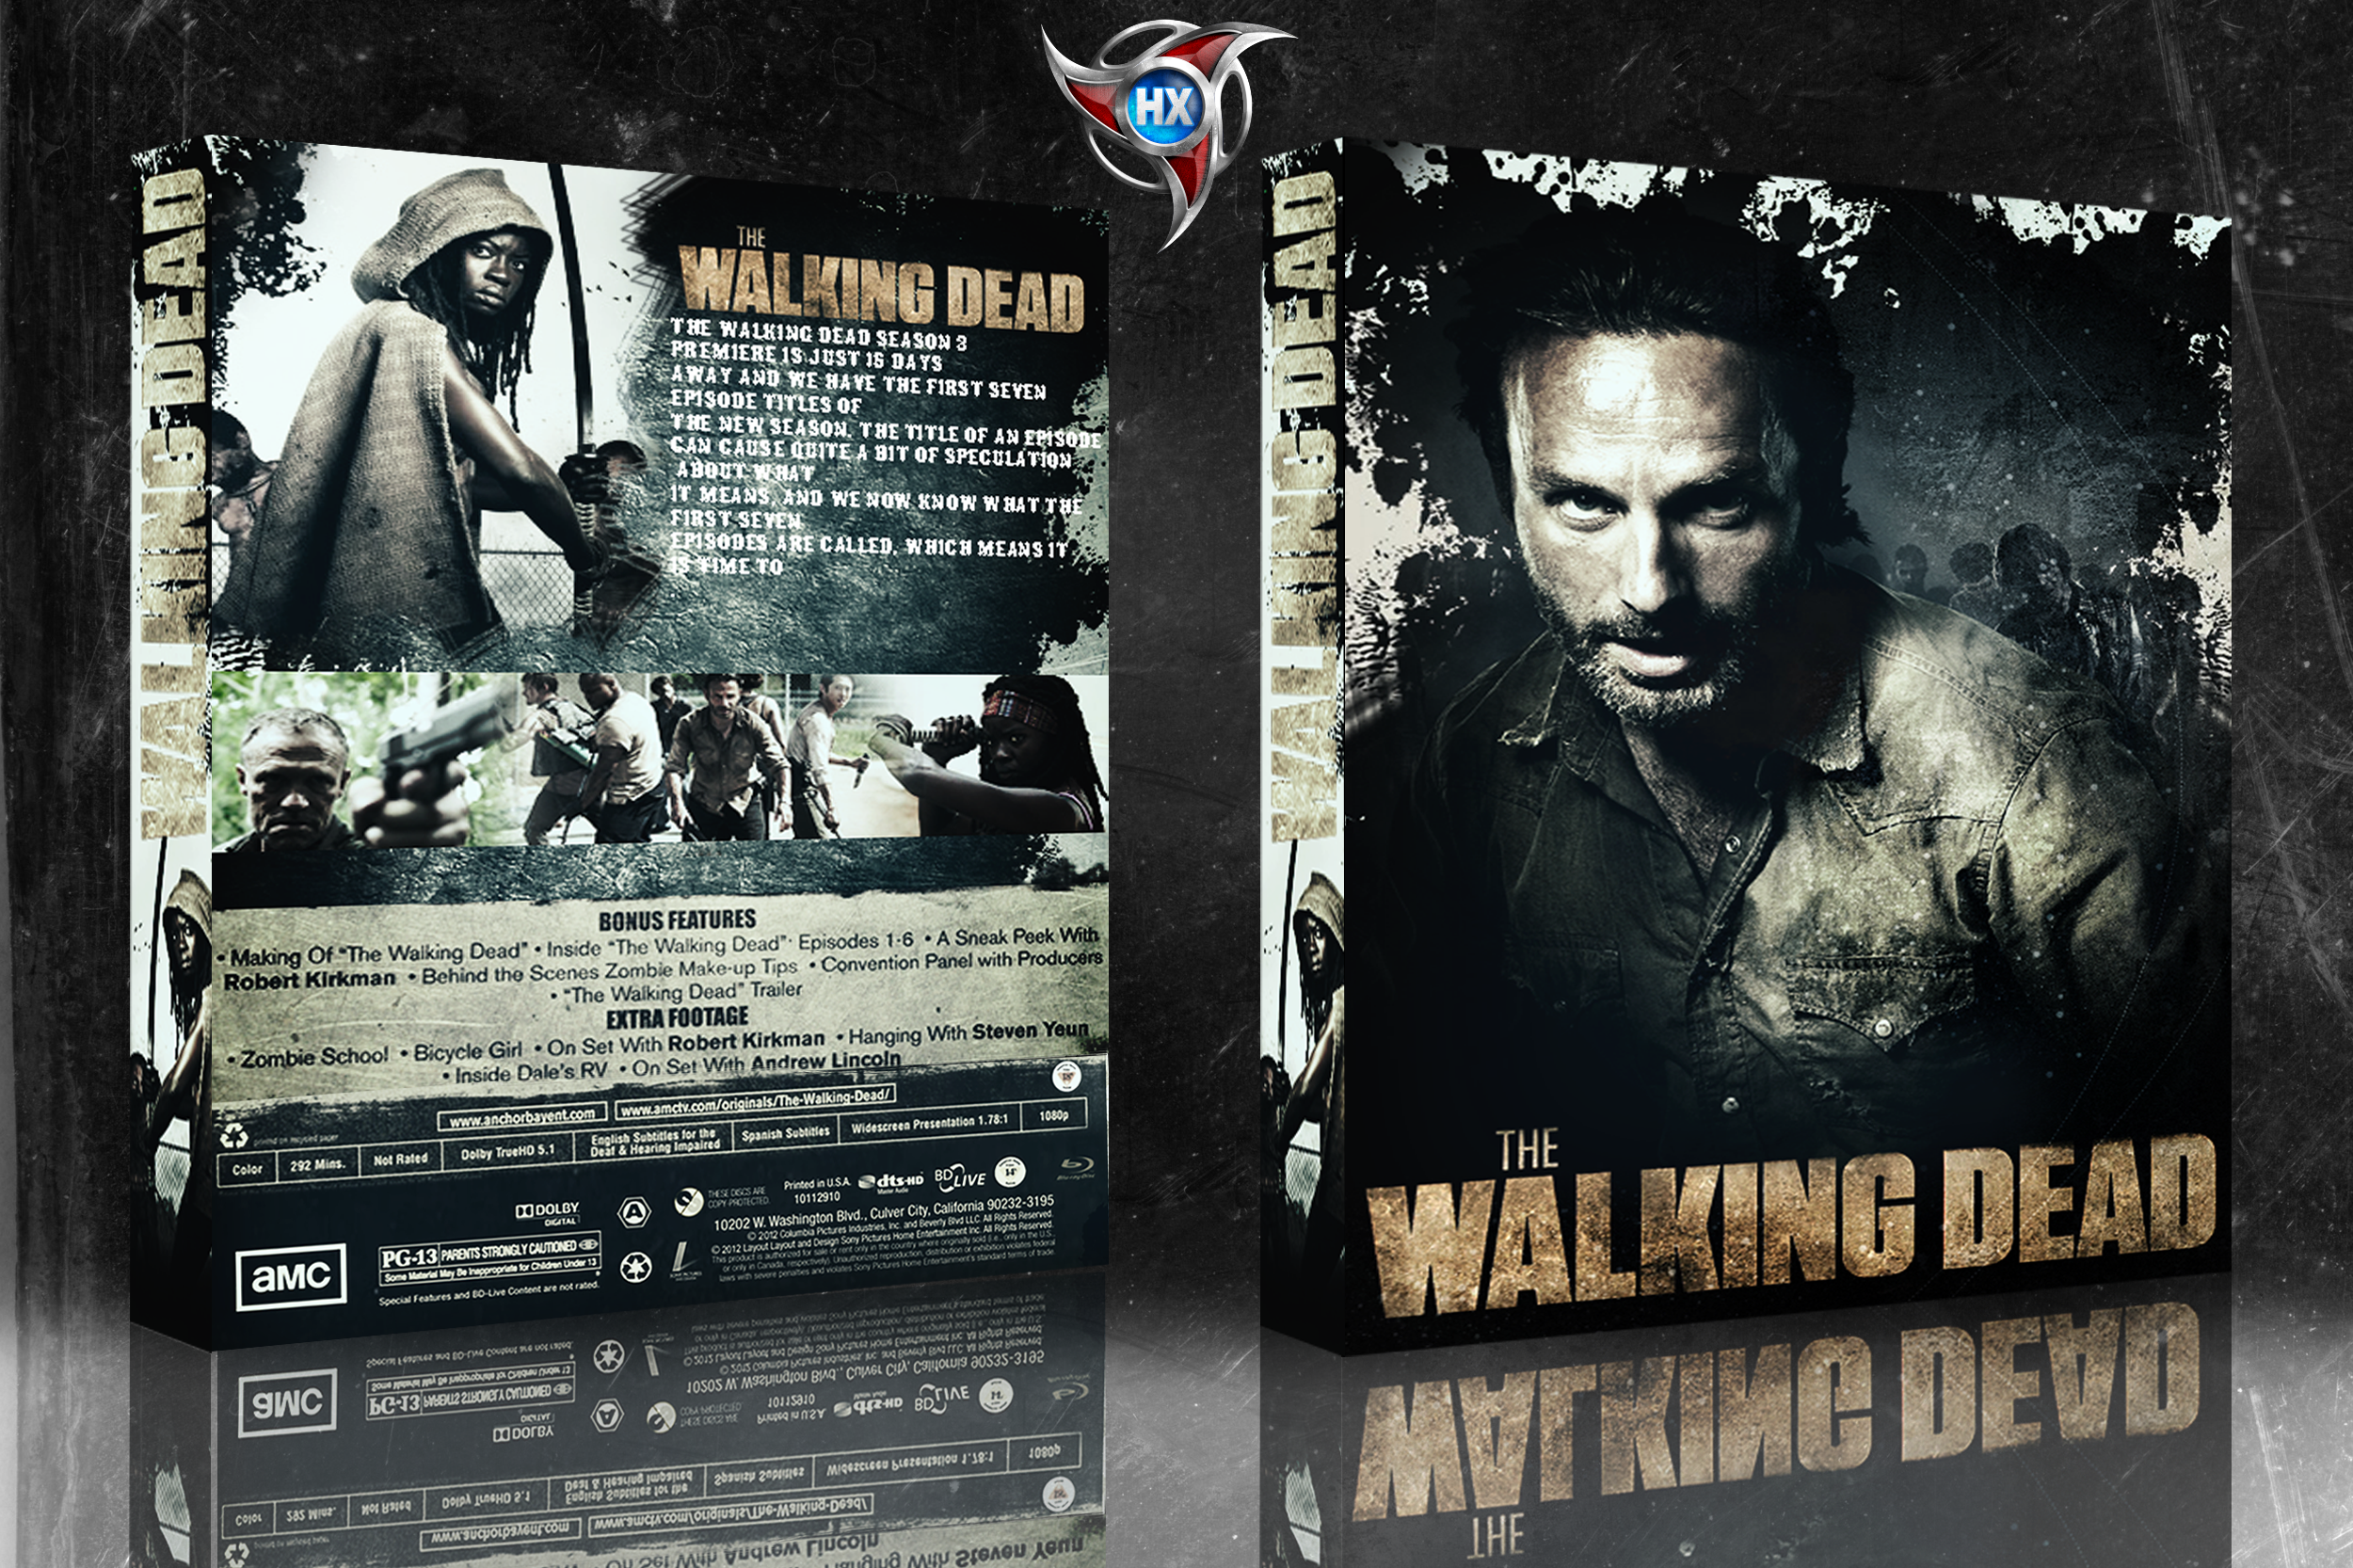 The Walking Dead: Season 3 box cover